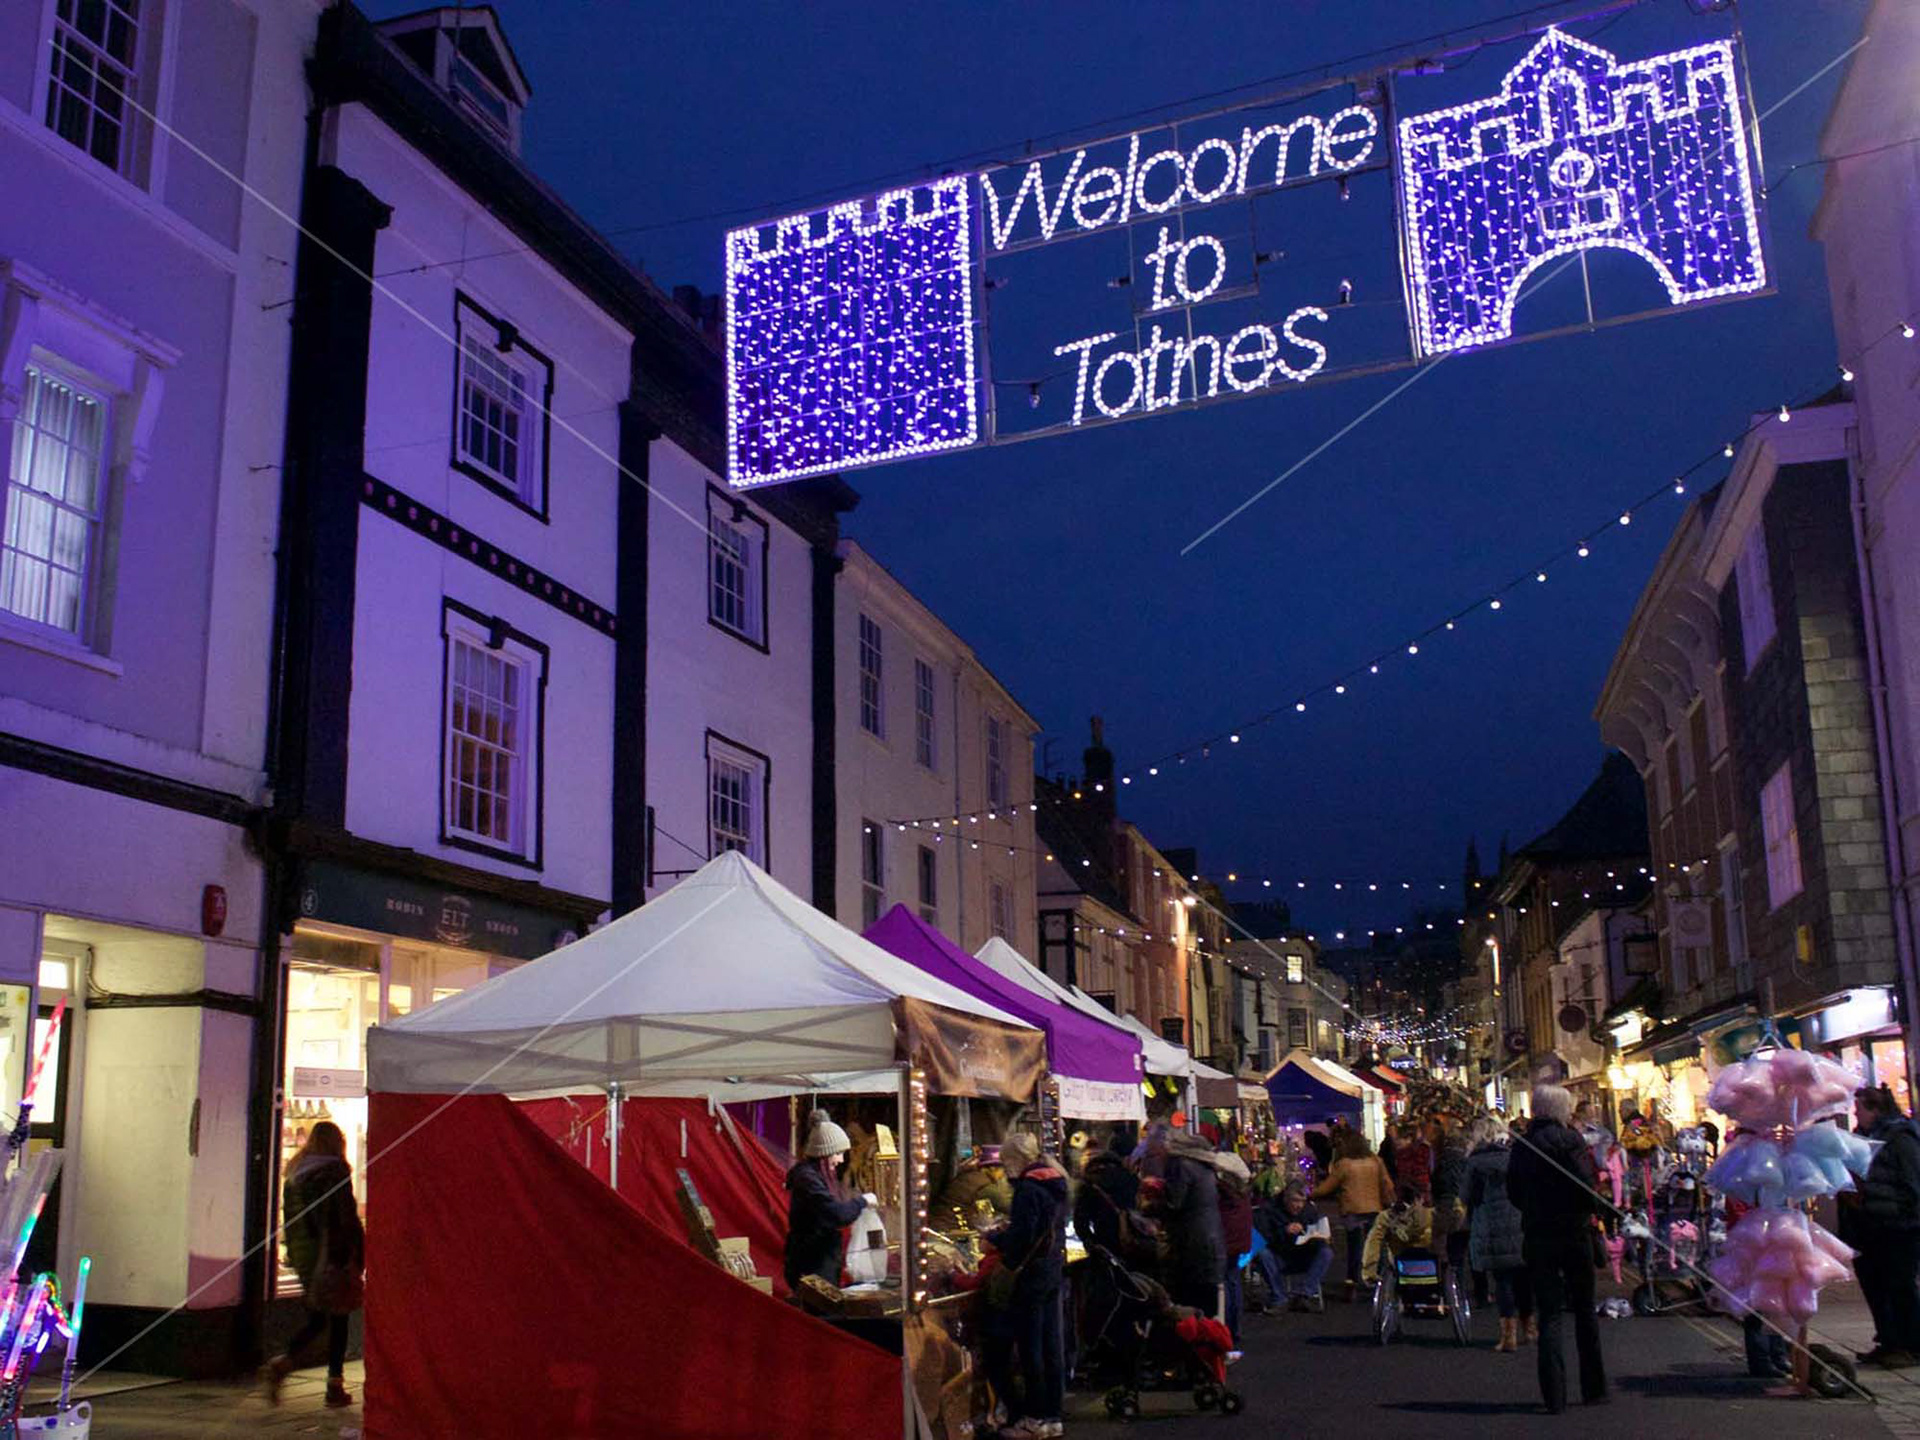 Photos of South Devon Totnes Christmas Market